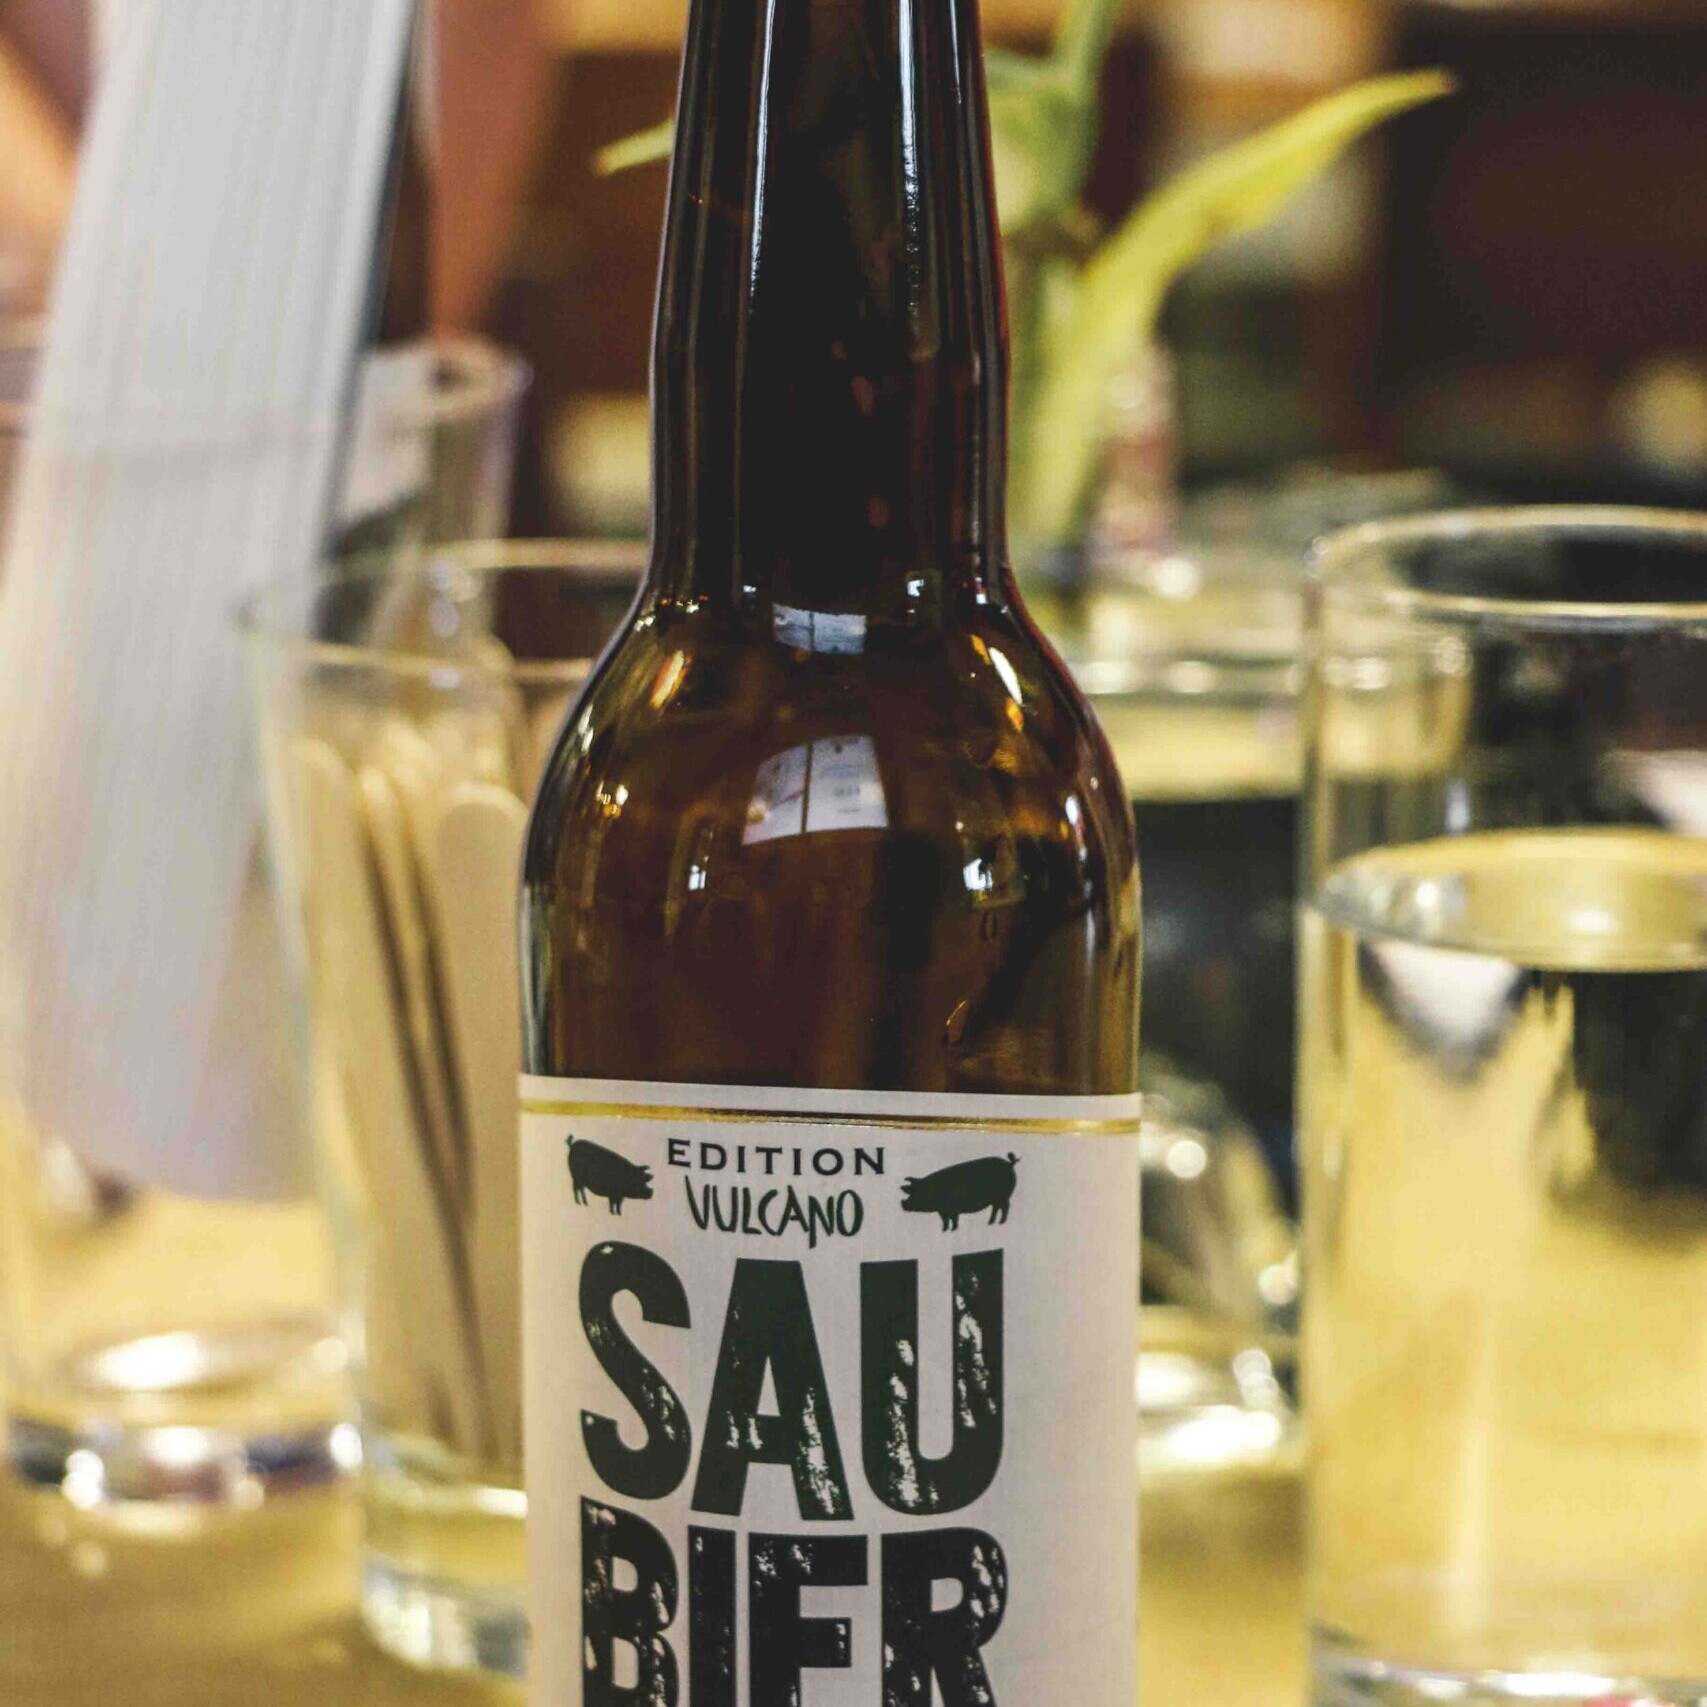 bottle of Sau beer from Vulcano ham factory